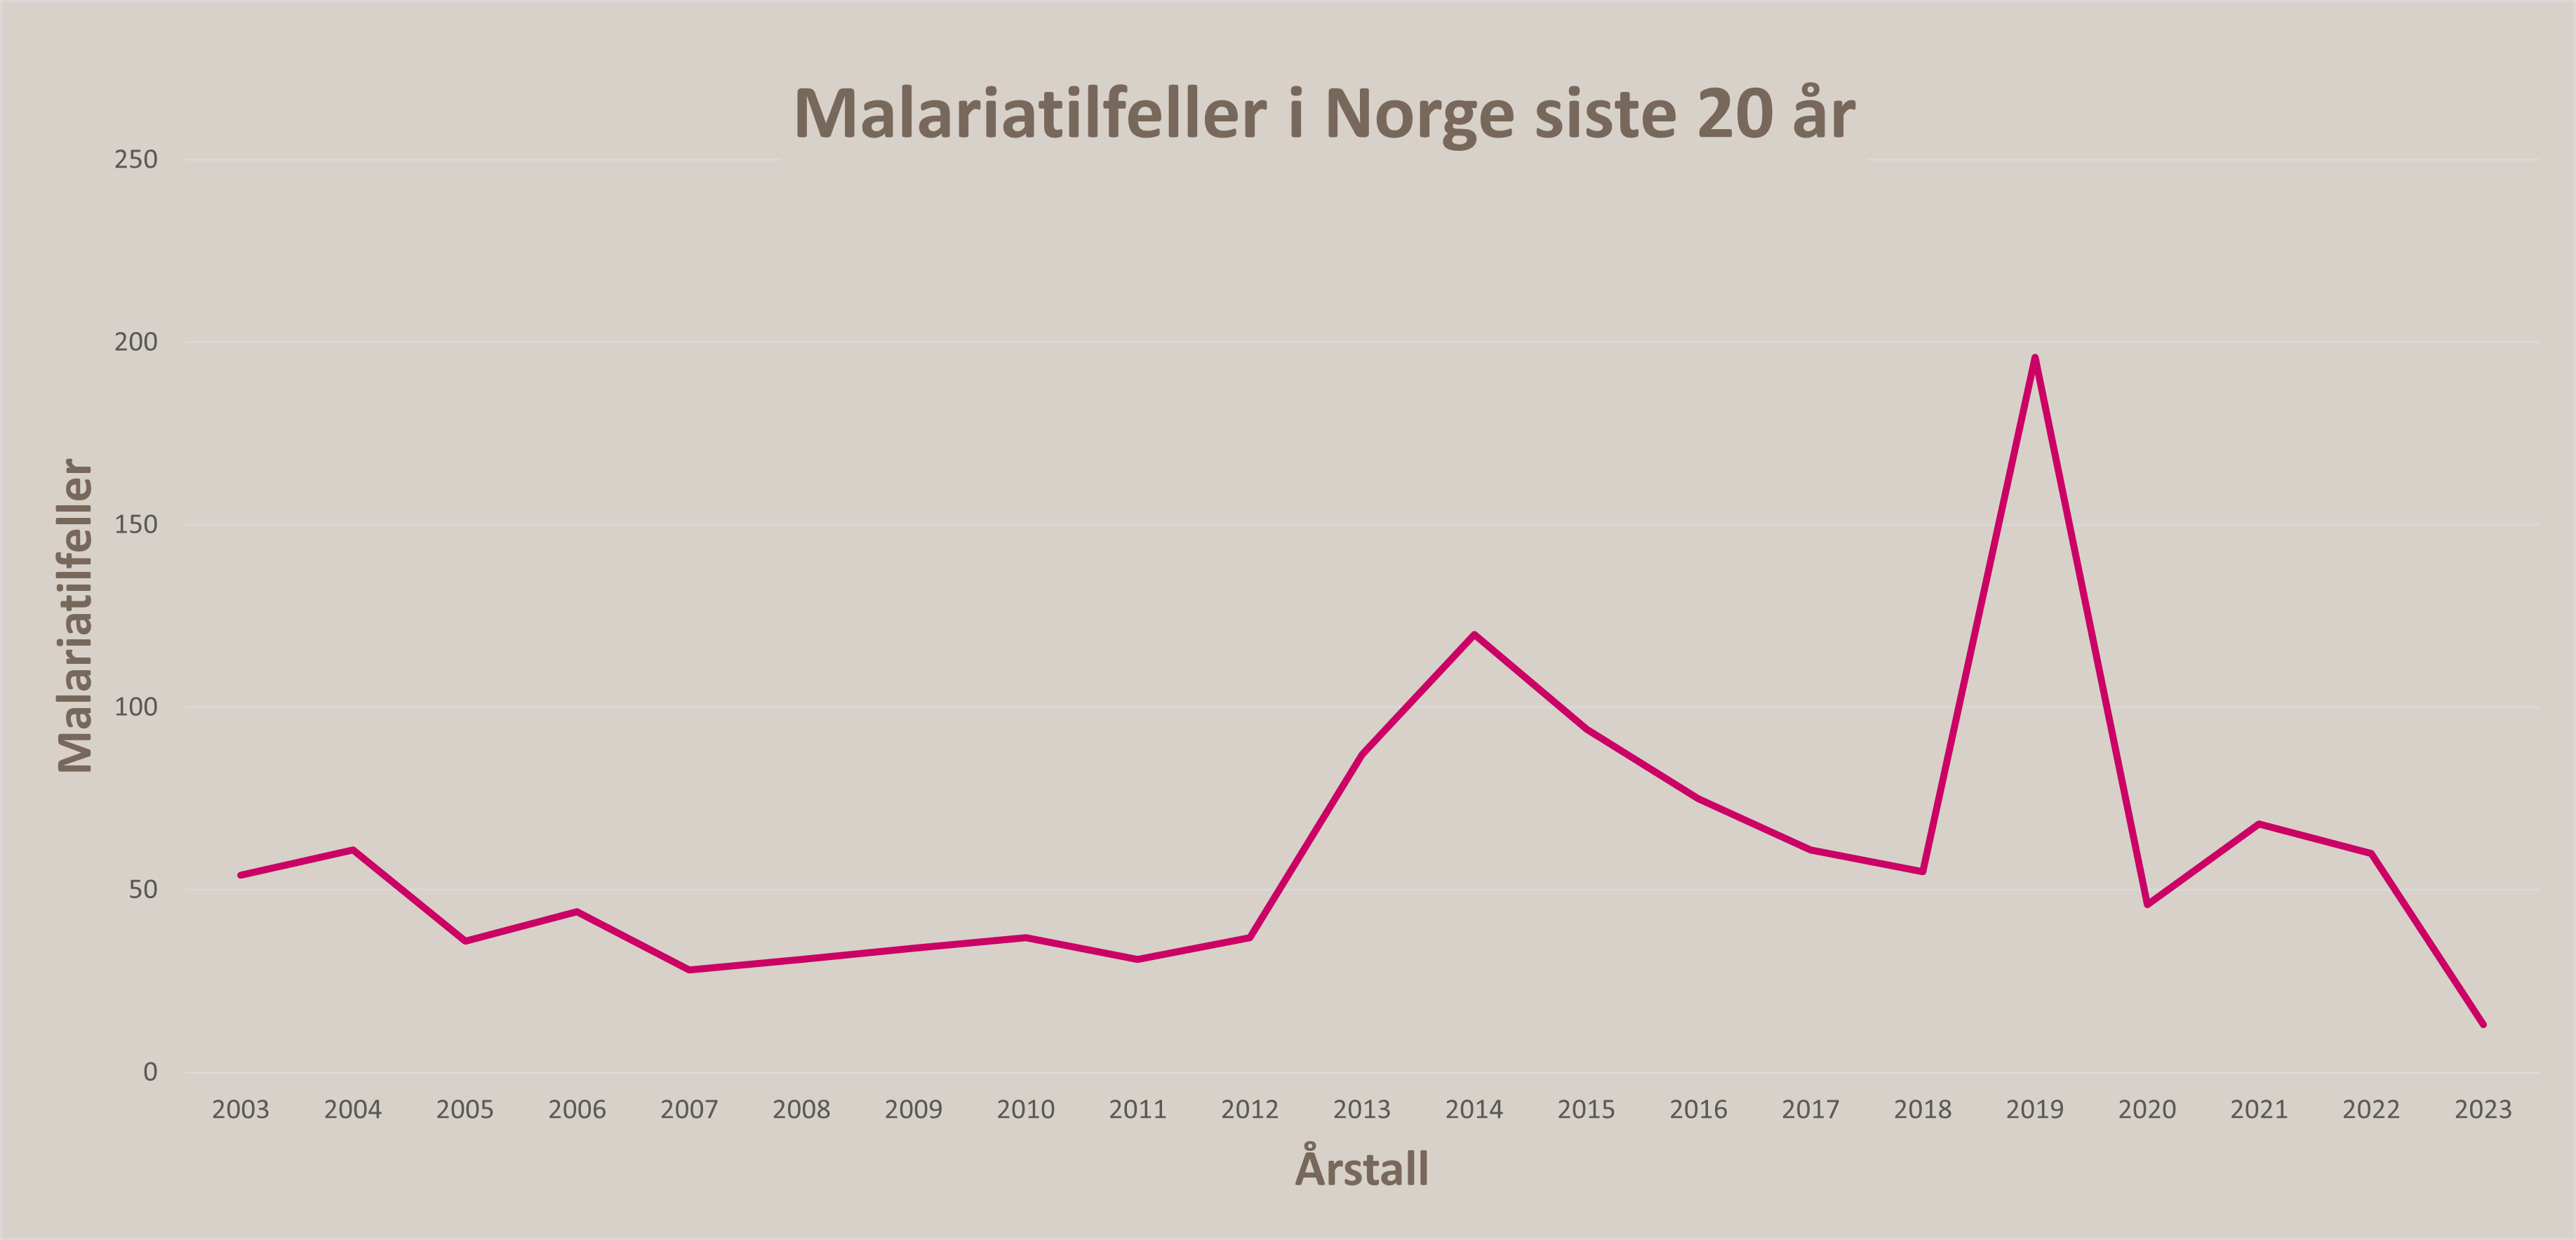 Malariatilfeller i Norge siste 20 år, årstall x-akse og malariatilfeller y-akse.png